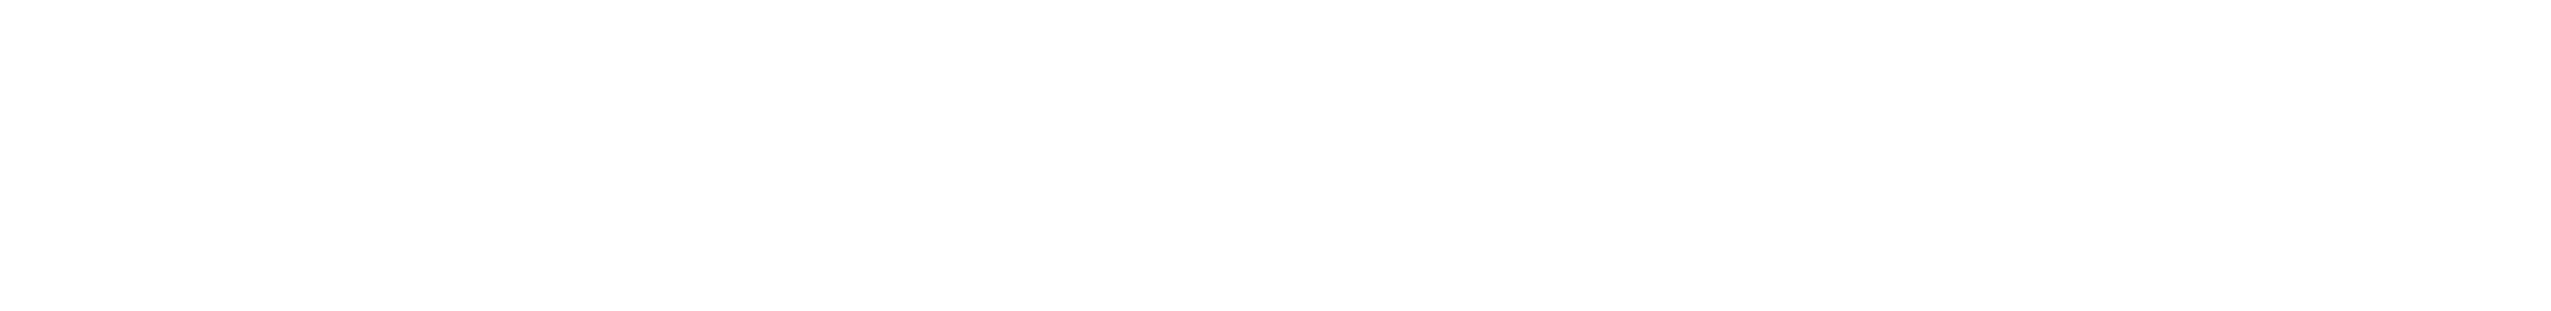 brendan gallagher, cfp logo